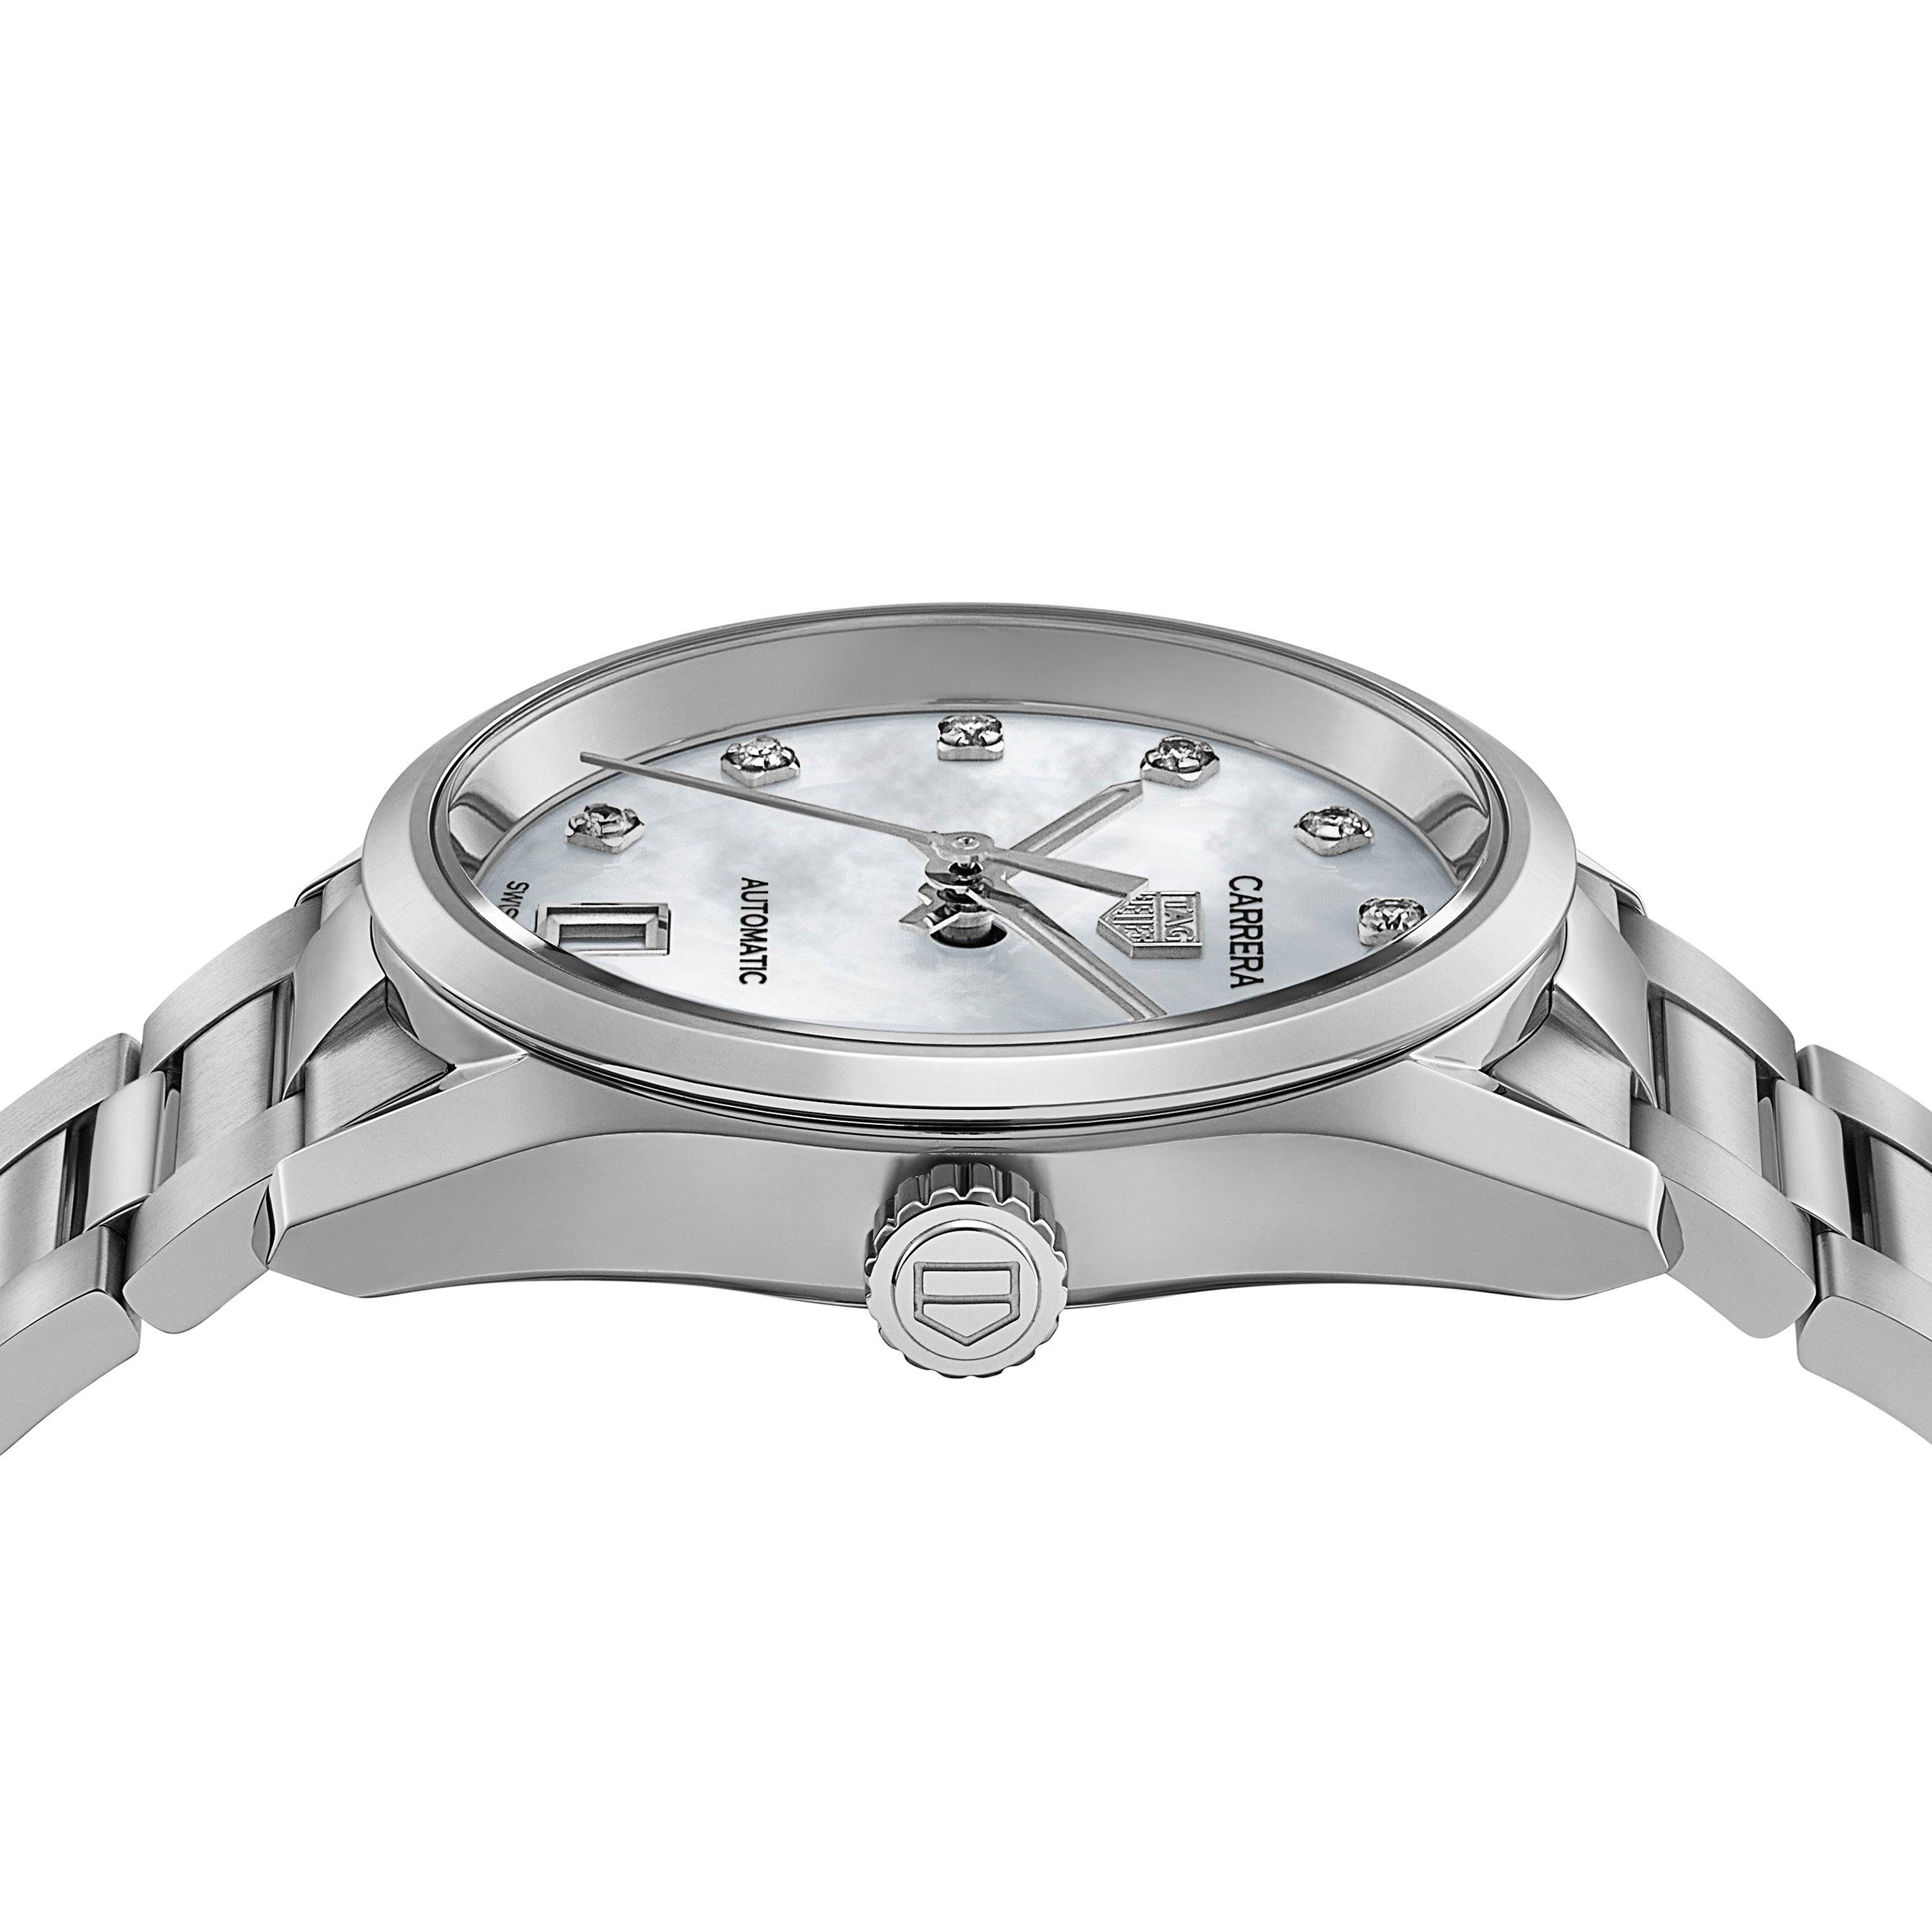 TAG Heuer Carrera Three Hands Date Automatic Diamond Ladies Watch